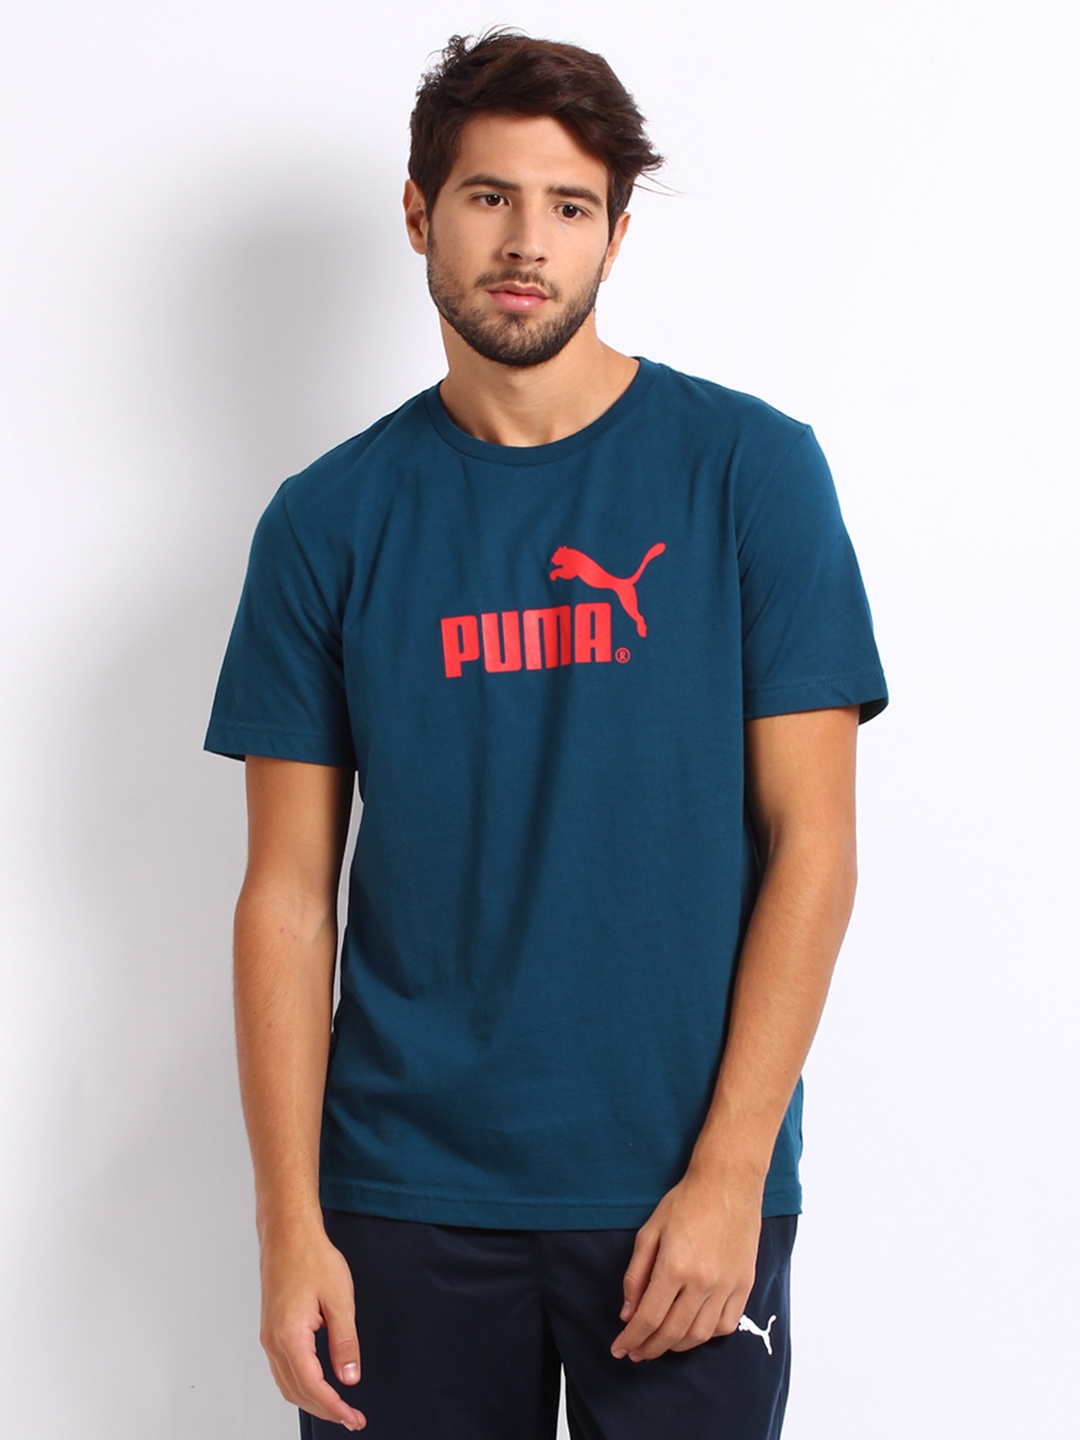 Buy Puma Men Teal Blue Printed T Shirt - Tshirts for Men 178731 | Myntra